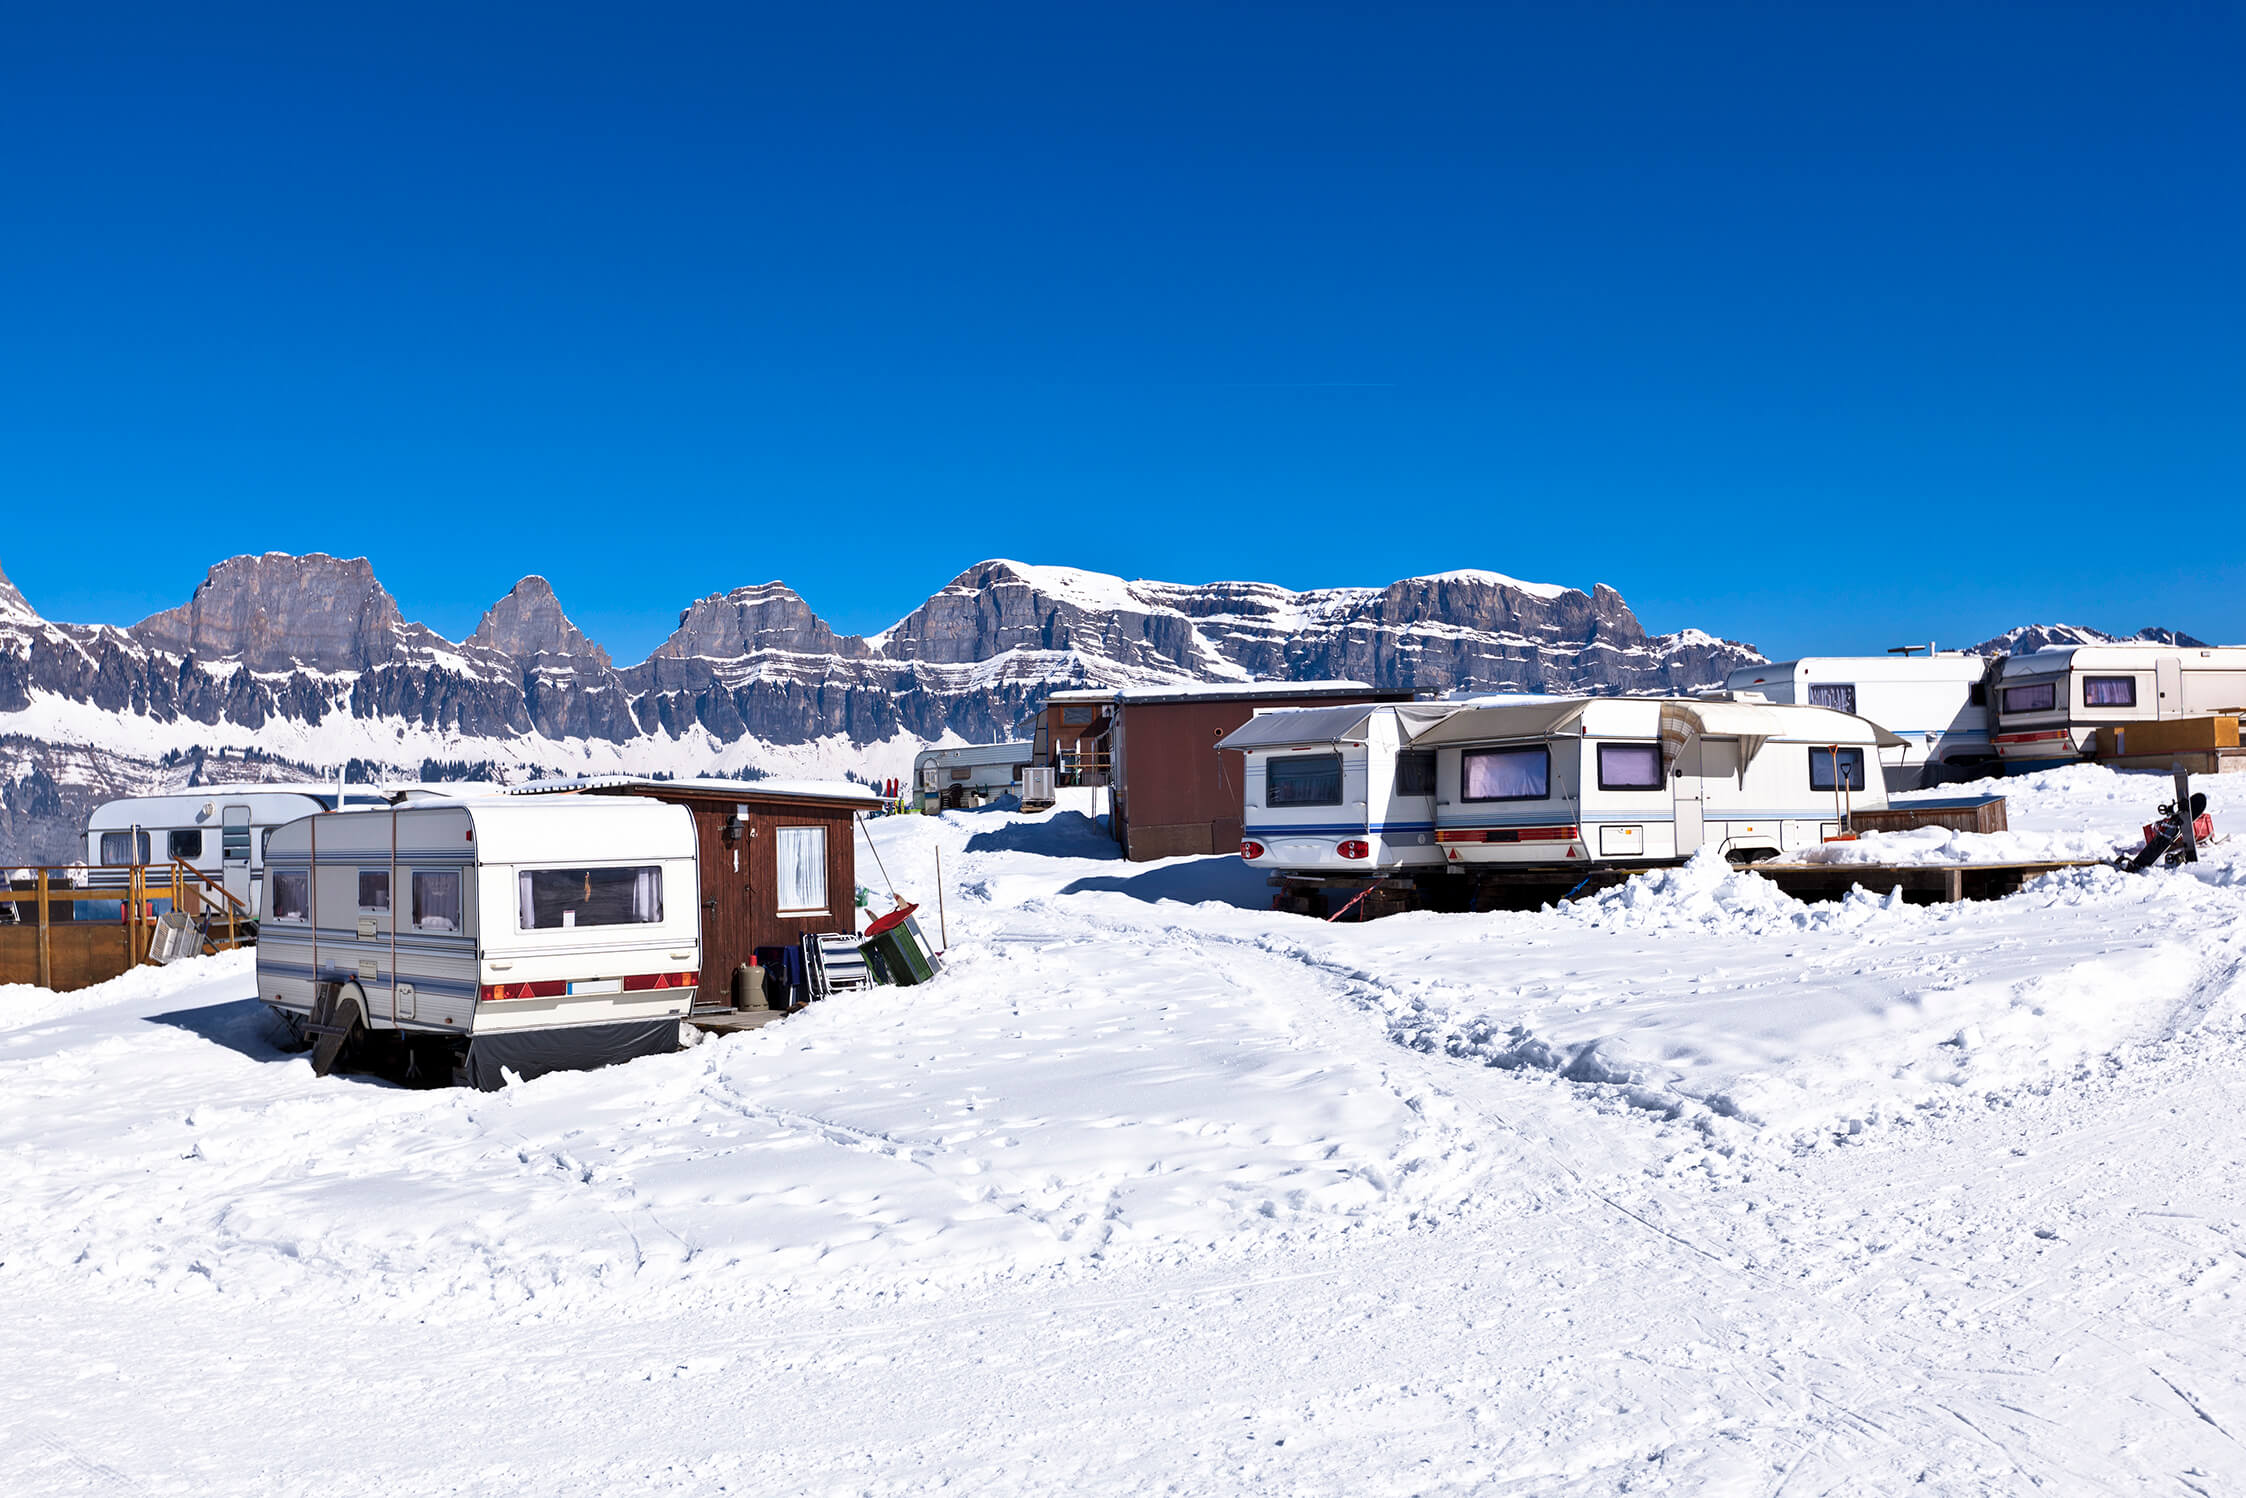 "camping caravans in the snow, swiss alps."